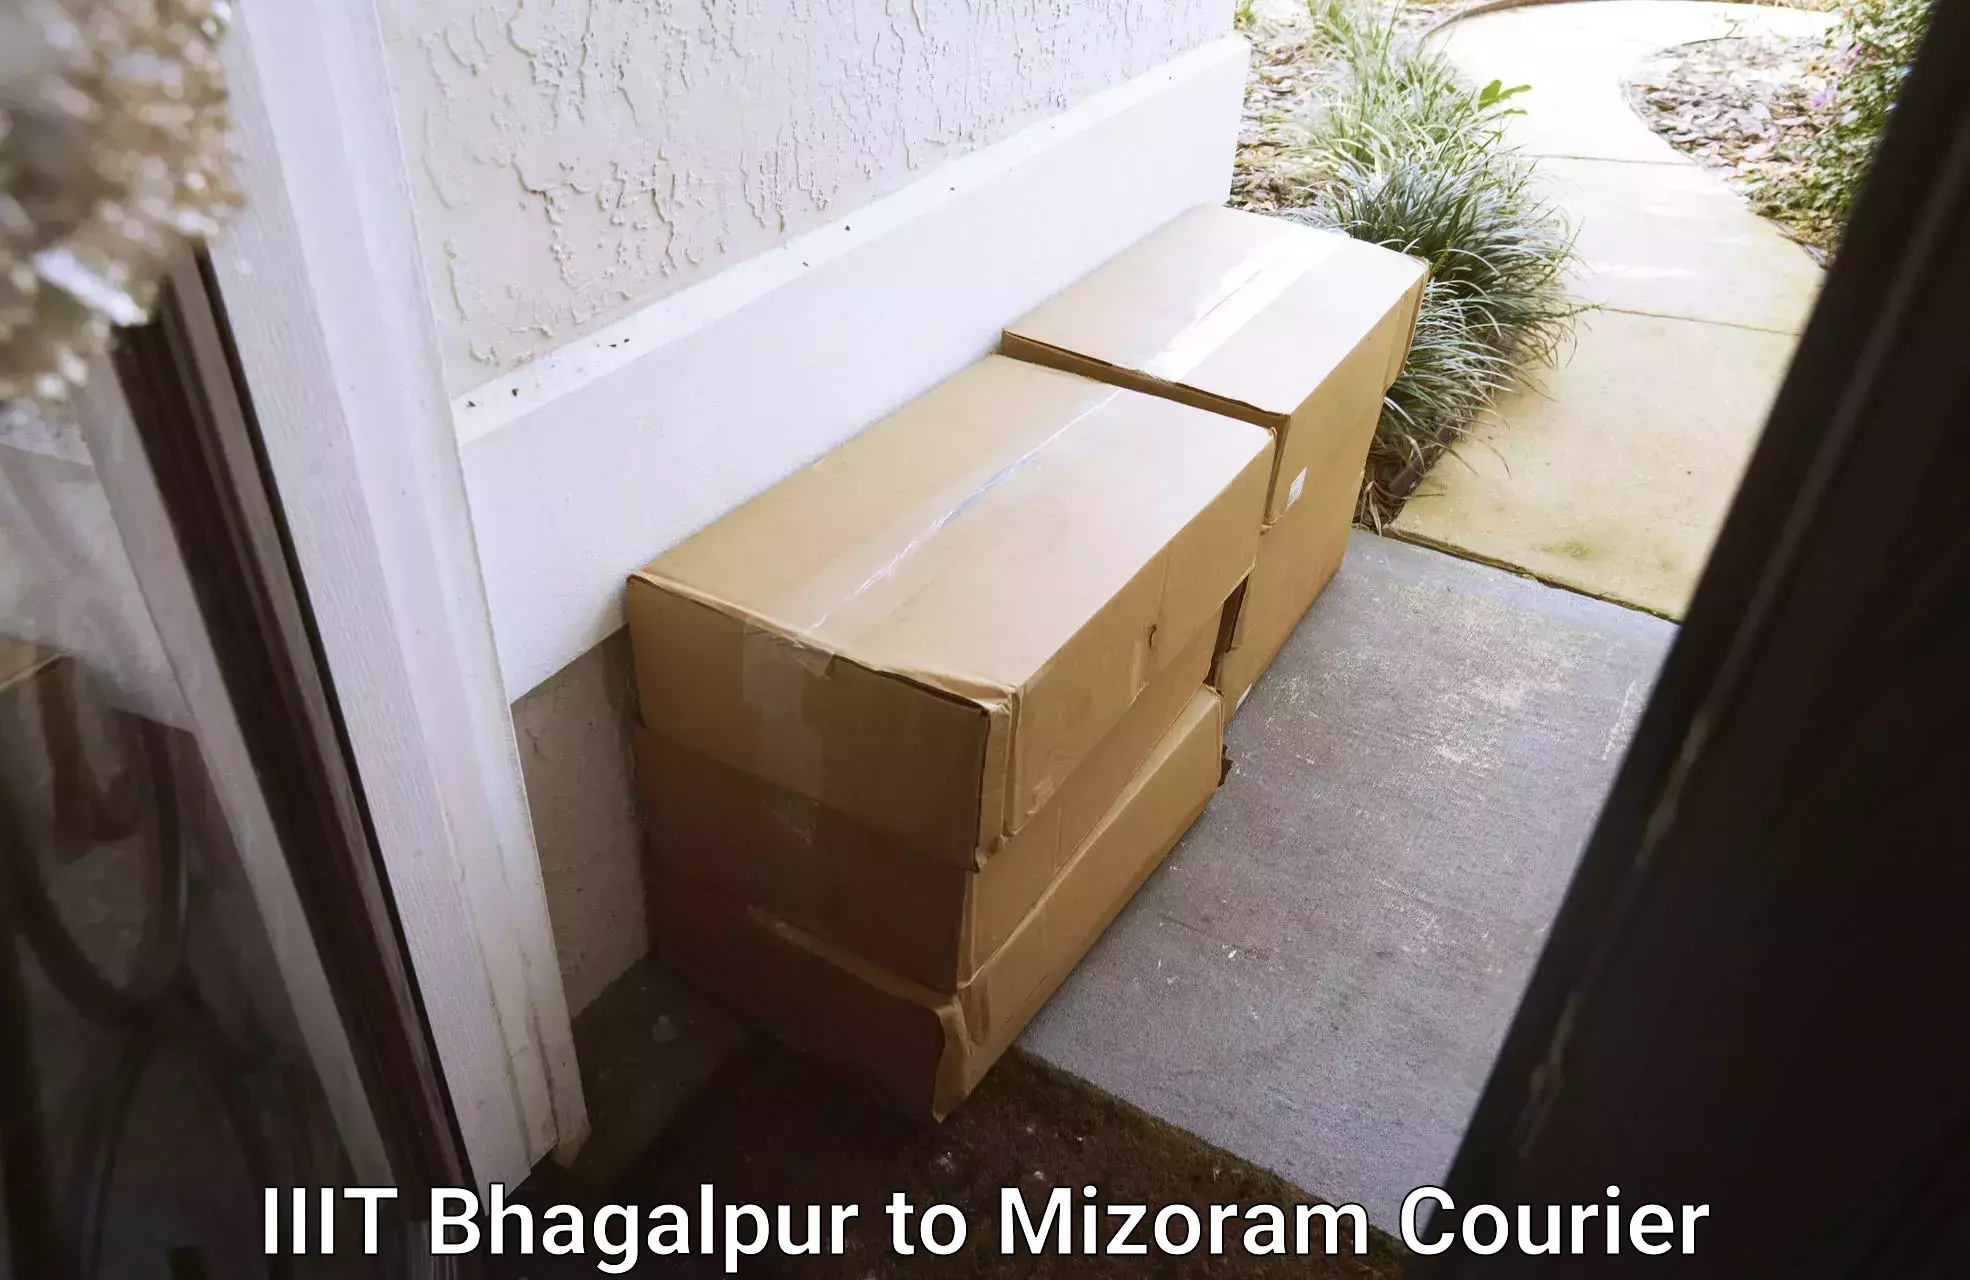 Efficient moving company IIIT Bhagalpur to Aizawl